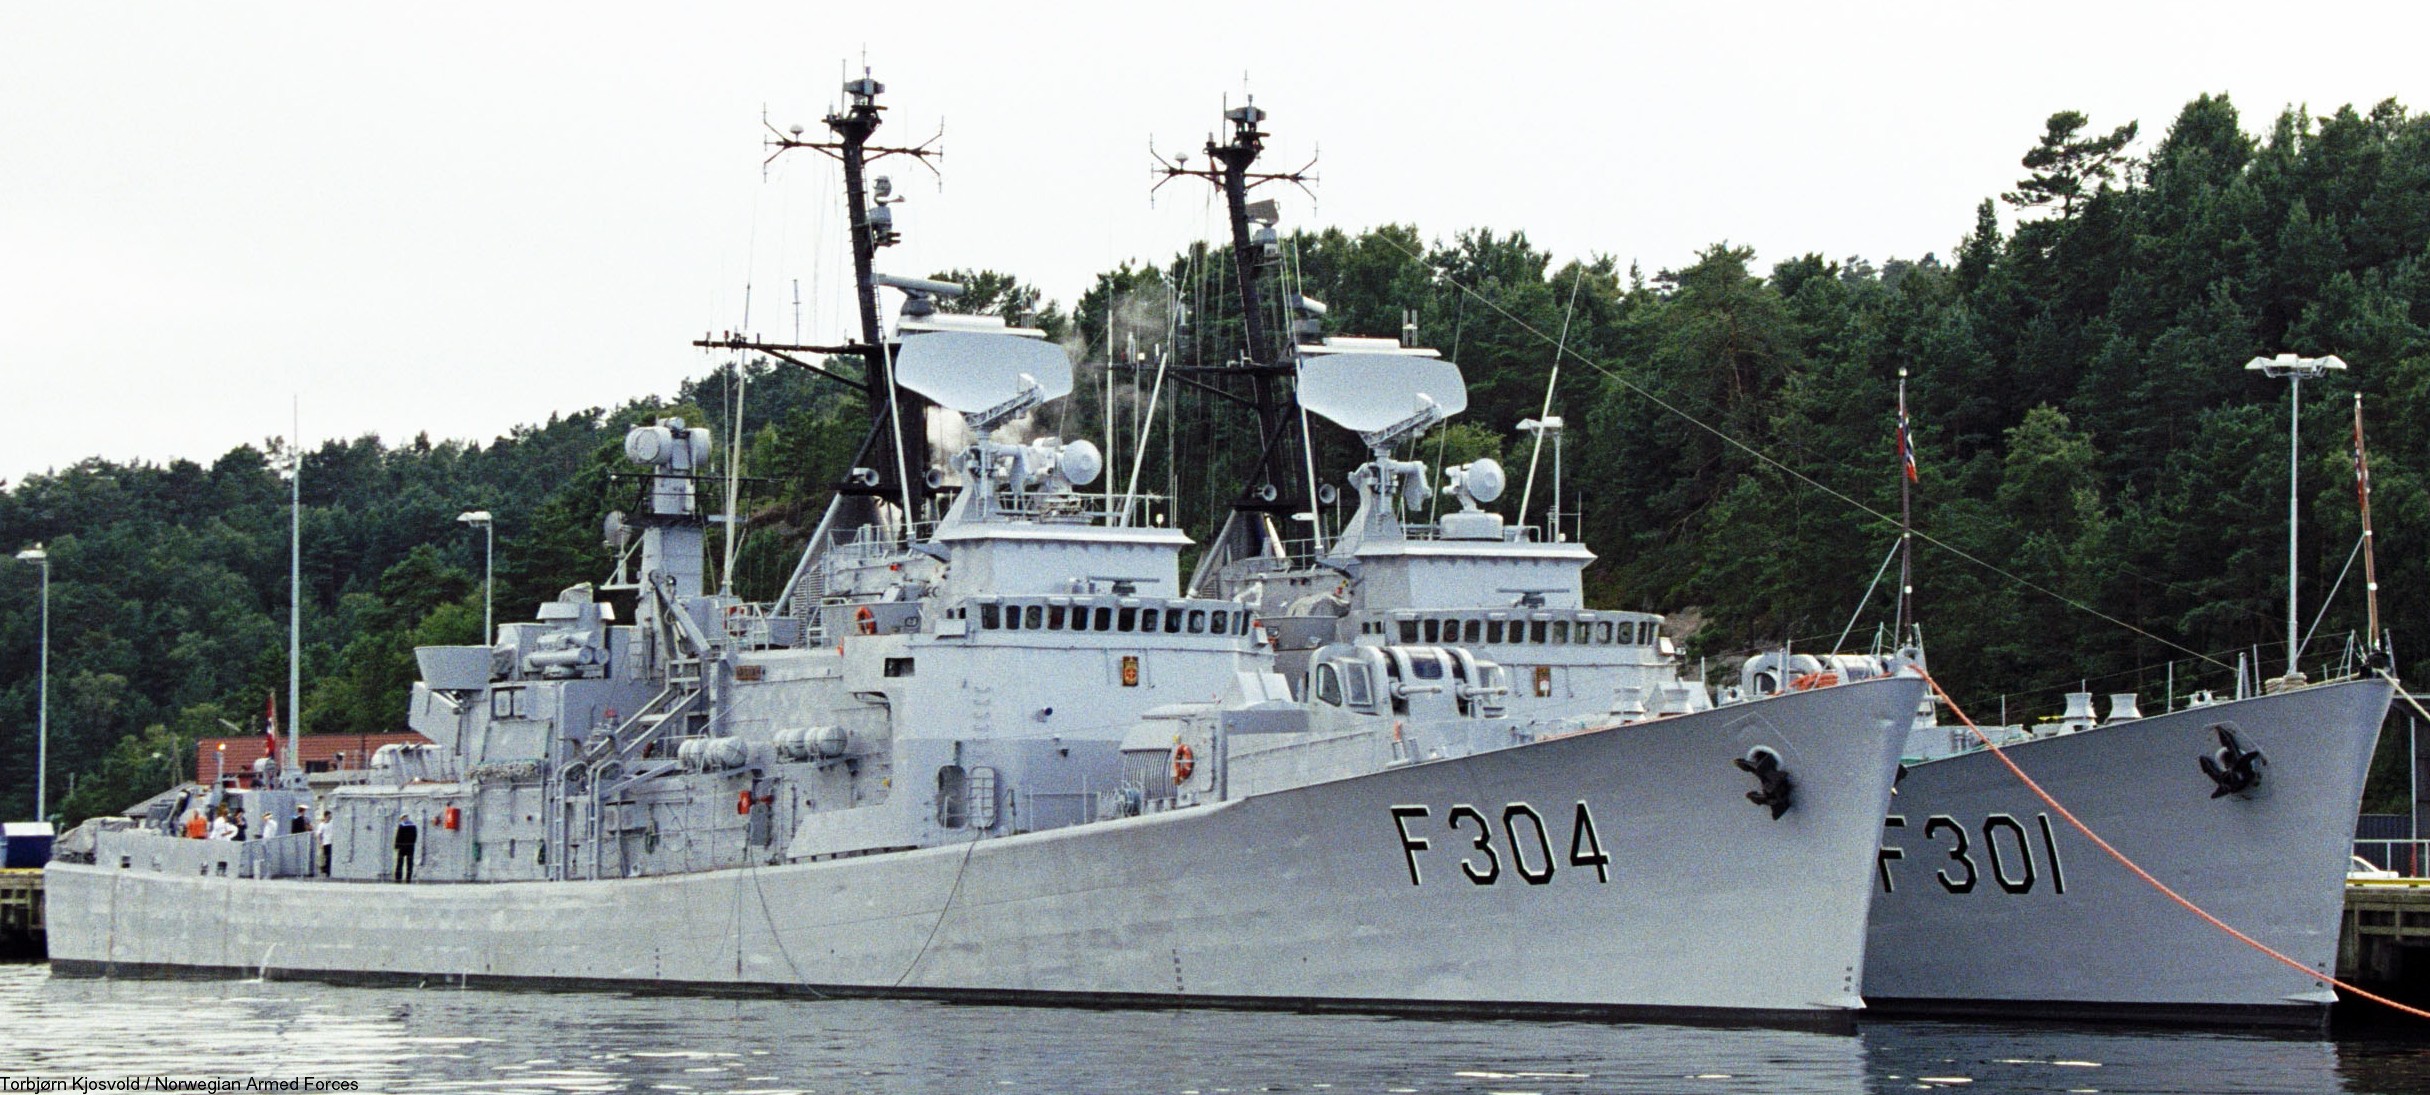 f-304 hnoms narvik knm oslo class frigate royal norwegian navy sjoforsvaret 17